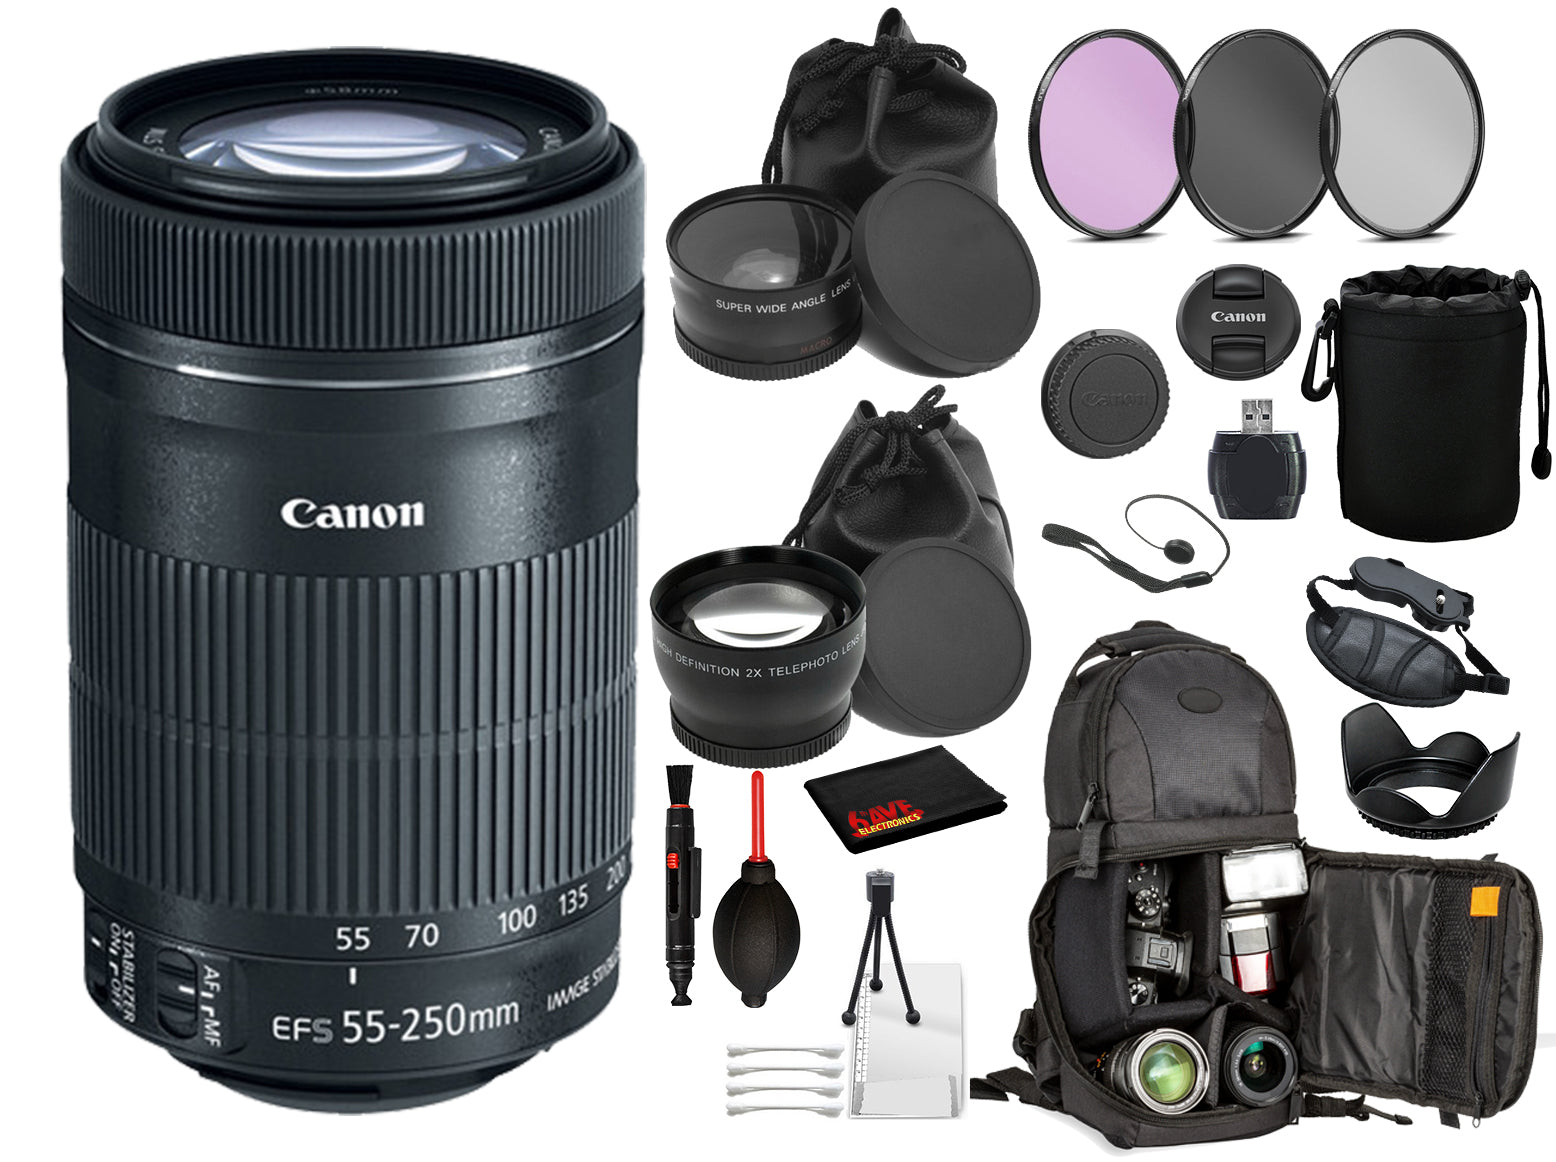 Canon EF-S 55-250mm f/4-5.6 IS STM Lens (8546B002) Lens with Bundle includes- 3pc Filters + DSLR Sling Backpack + More